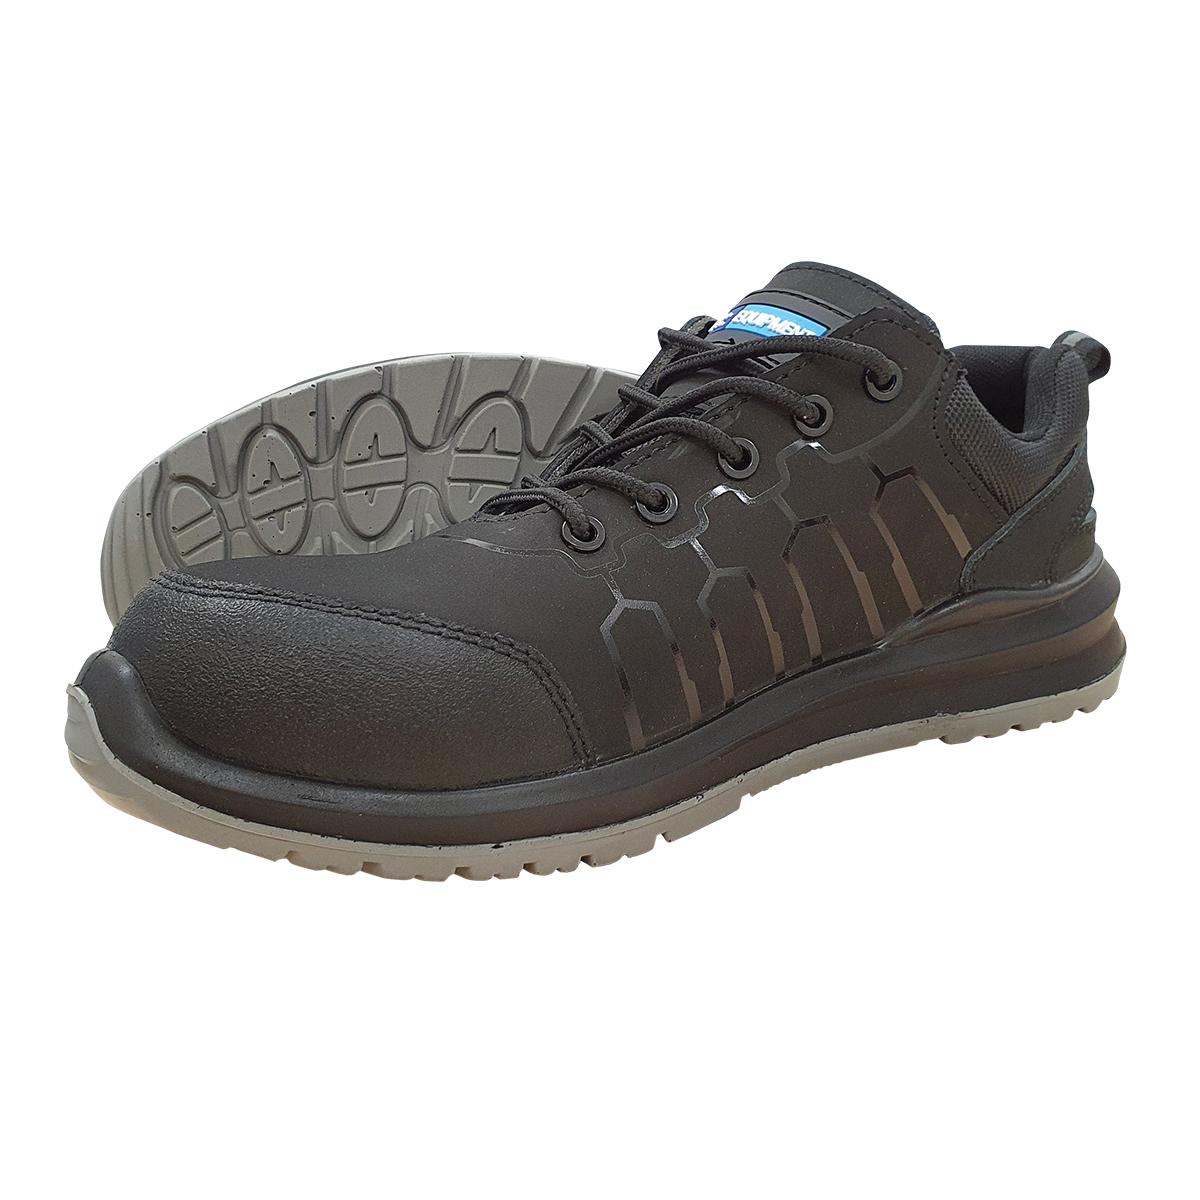 Pantofi protectie RTC, S3 ESD, Madeira, marime 38